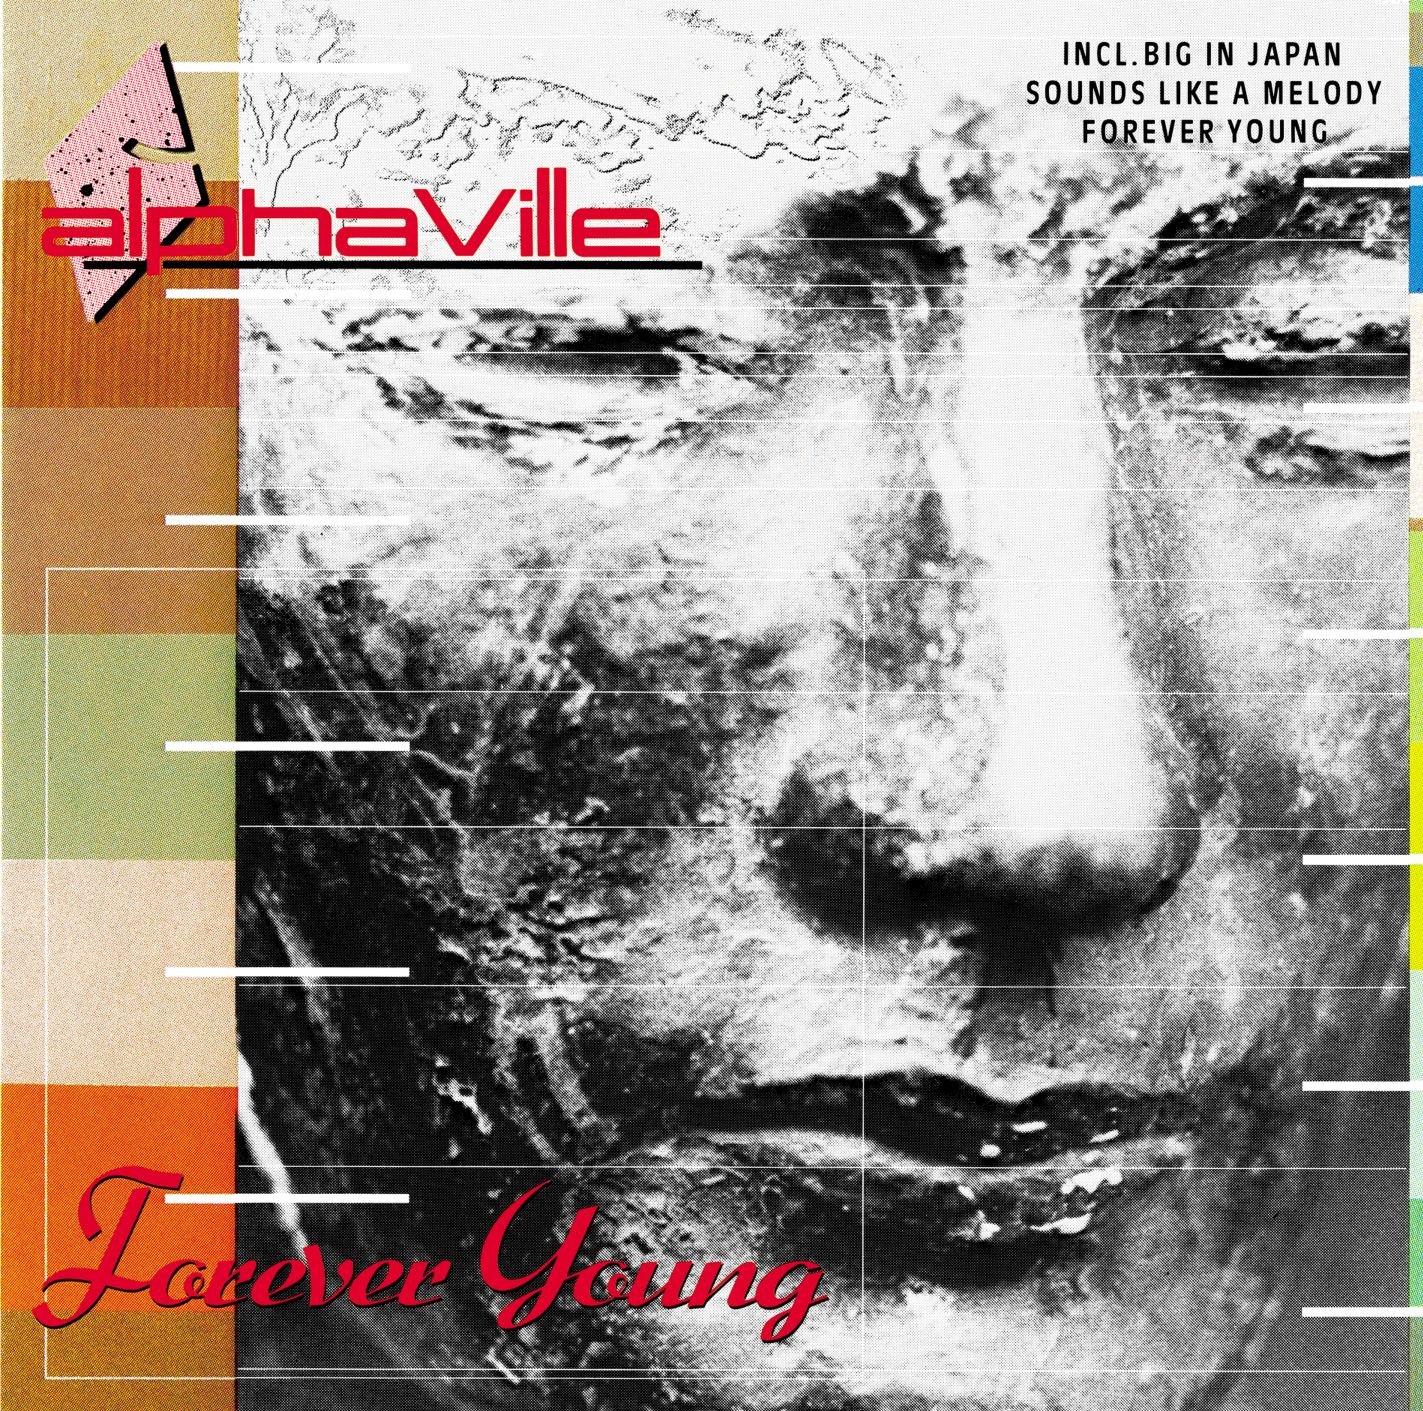 Alphaville "Forever Young" LP